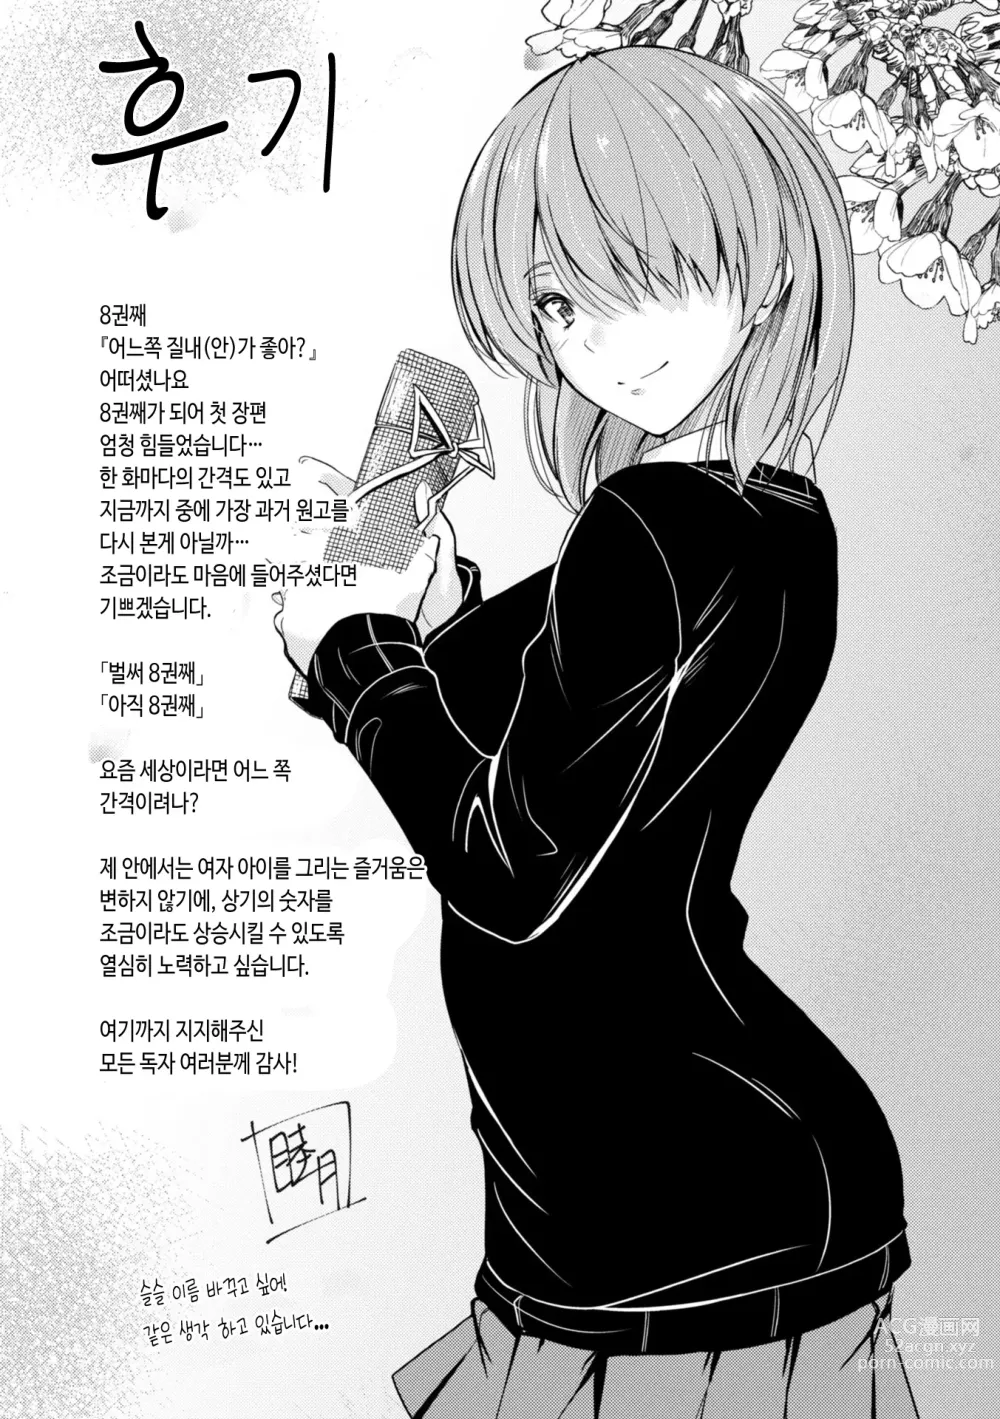 Page 203 of manga 어느쪽 질내가 좋아?